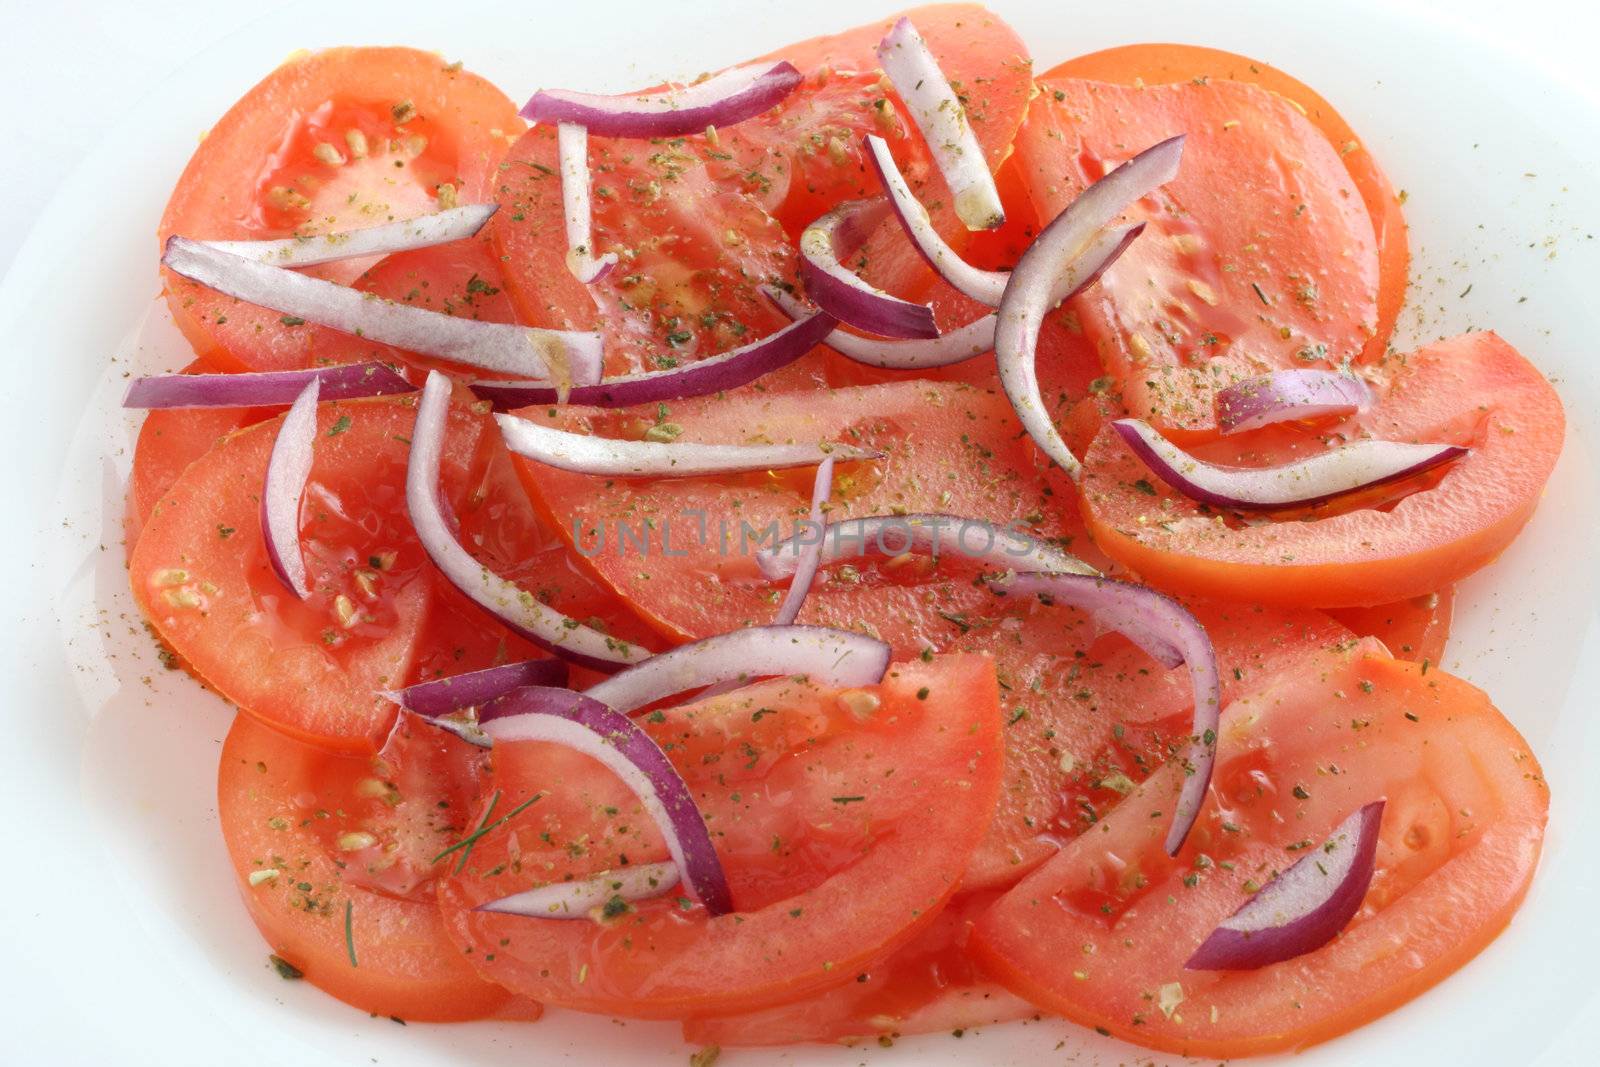 Tomato salad with onion